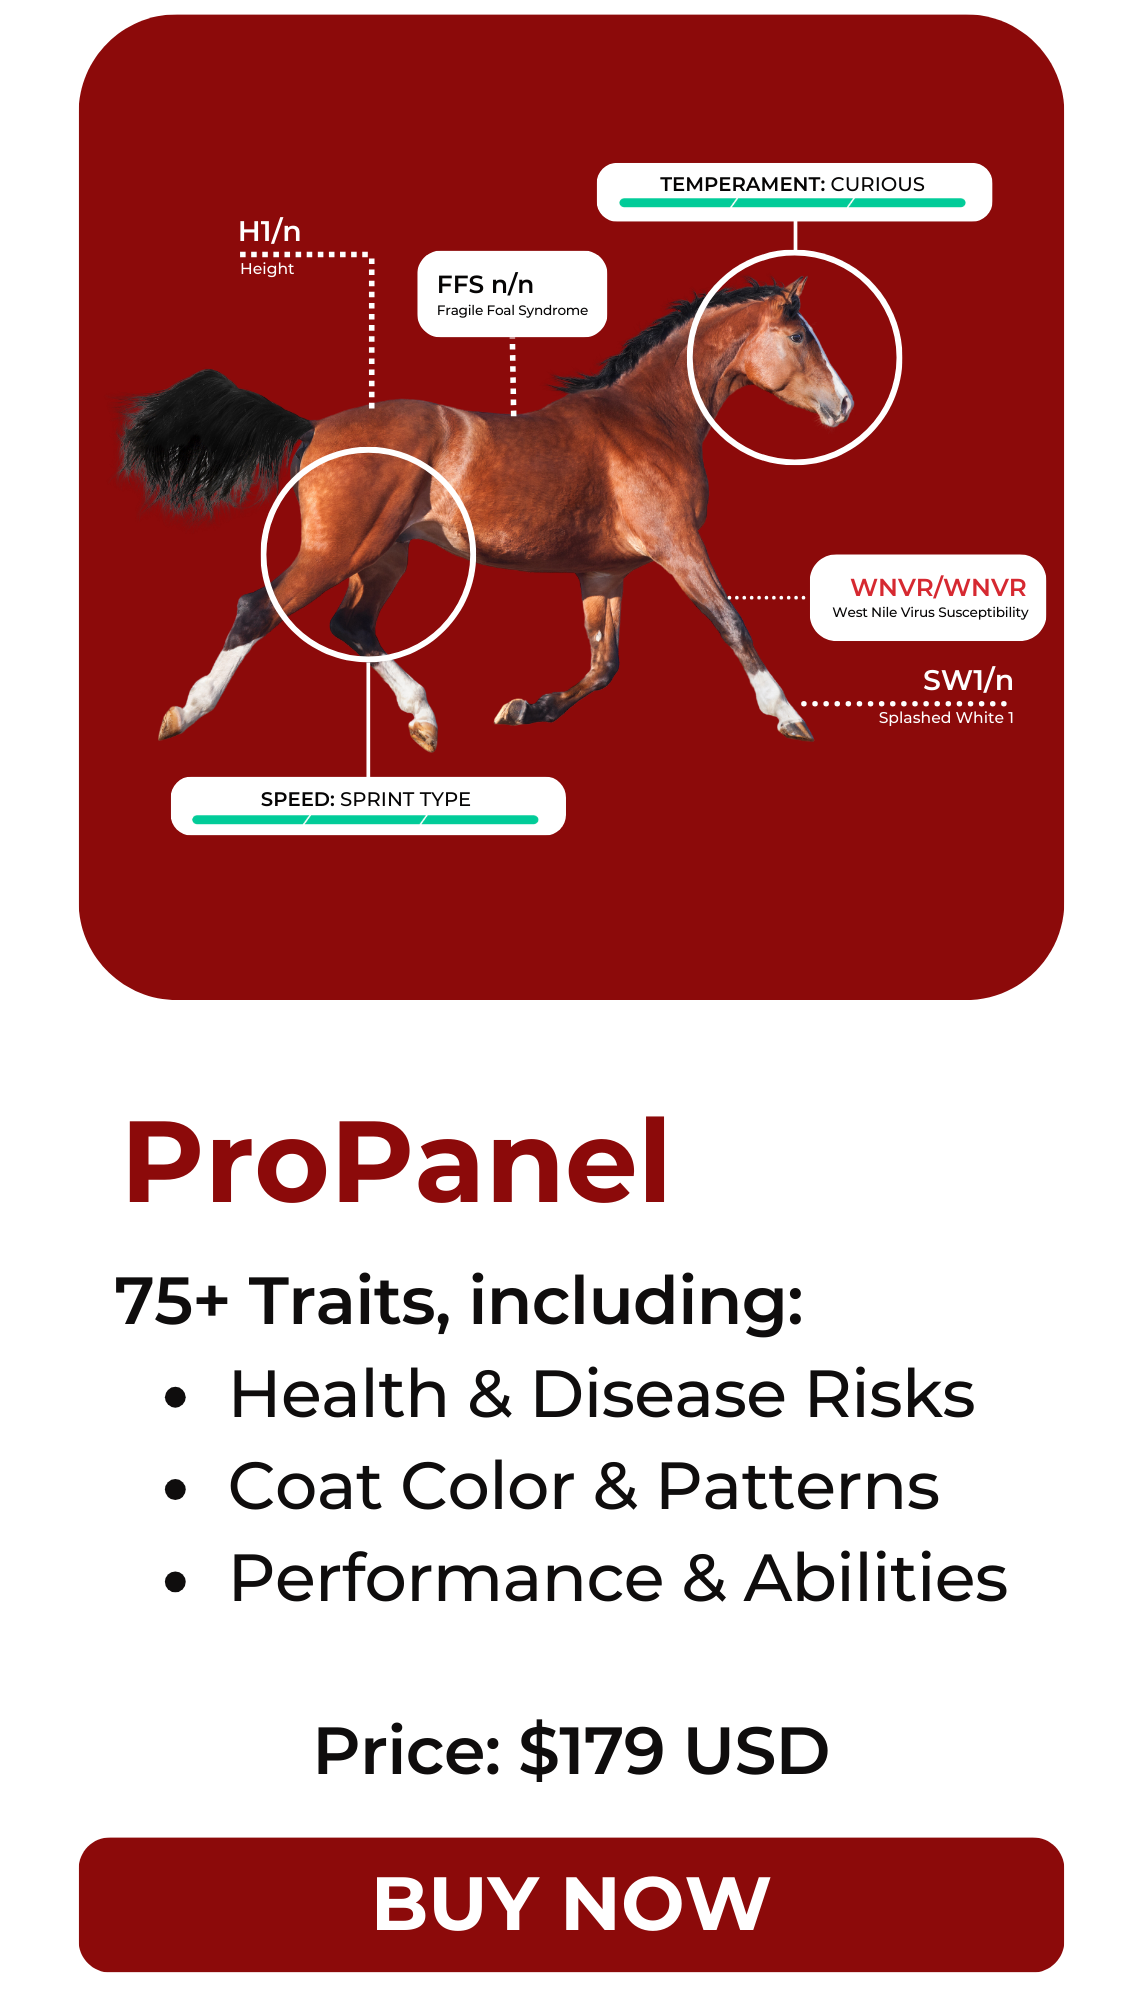 ProPanel Equine DNA Test